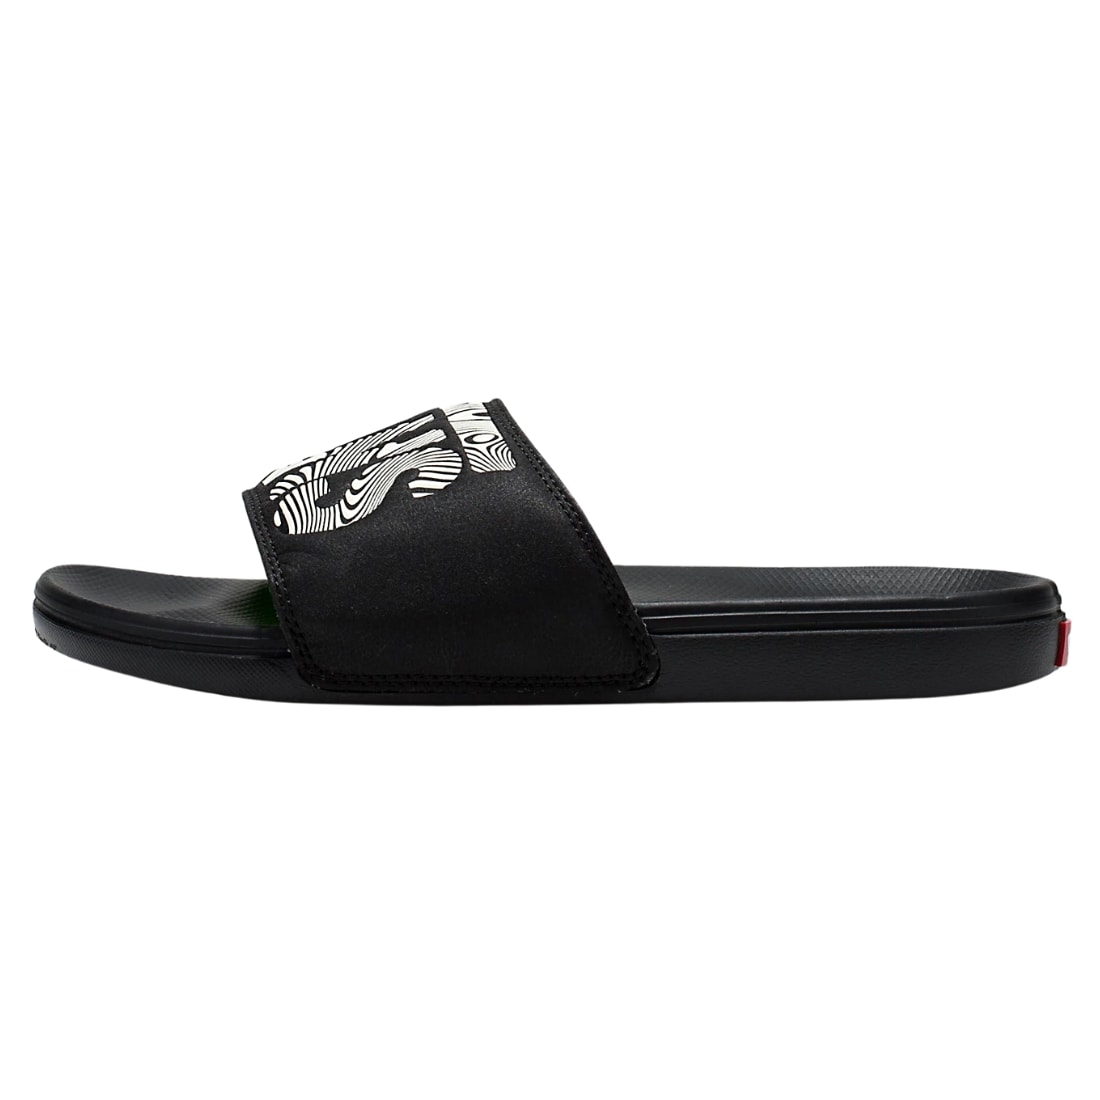 Vans La Costa Slide Sandals - Trippy Grain Black/Black - Mens Flip Flops by Vans